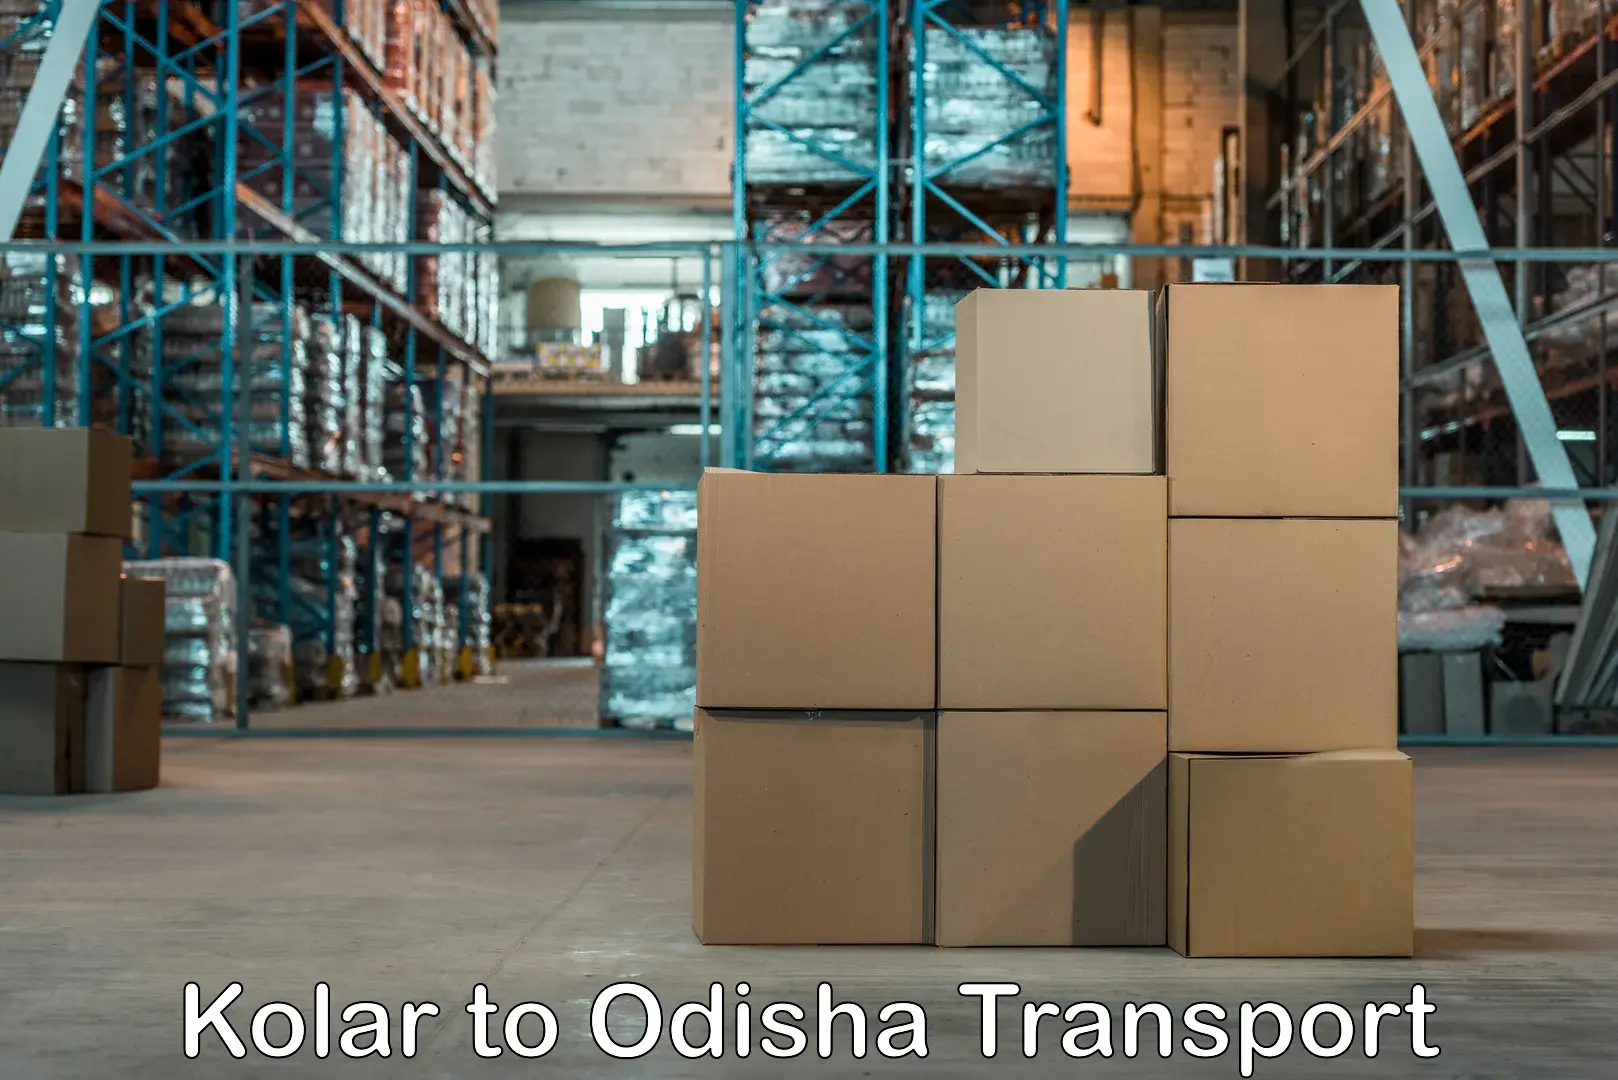 Container transport service Kolar to Gunupur